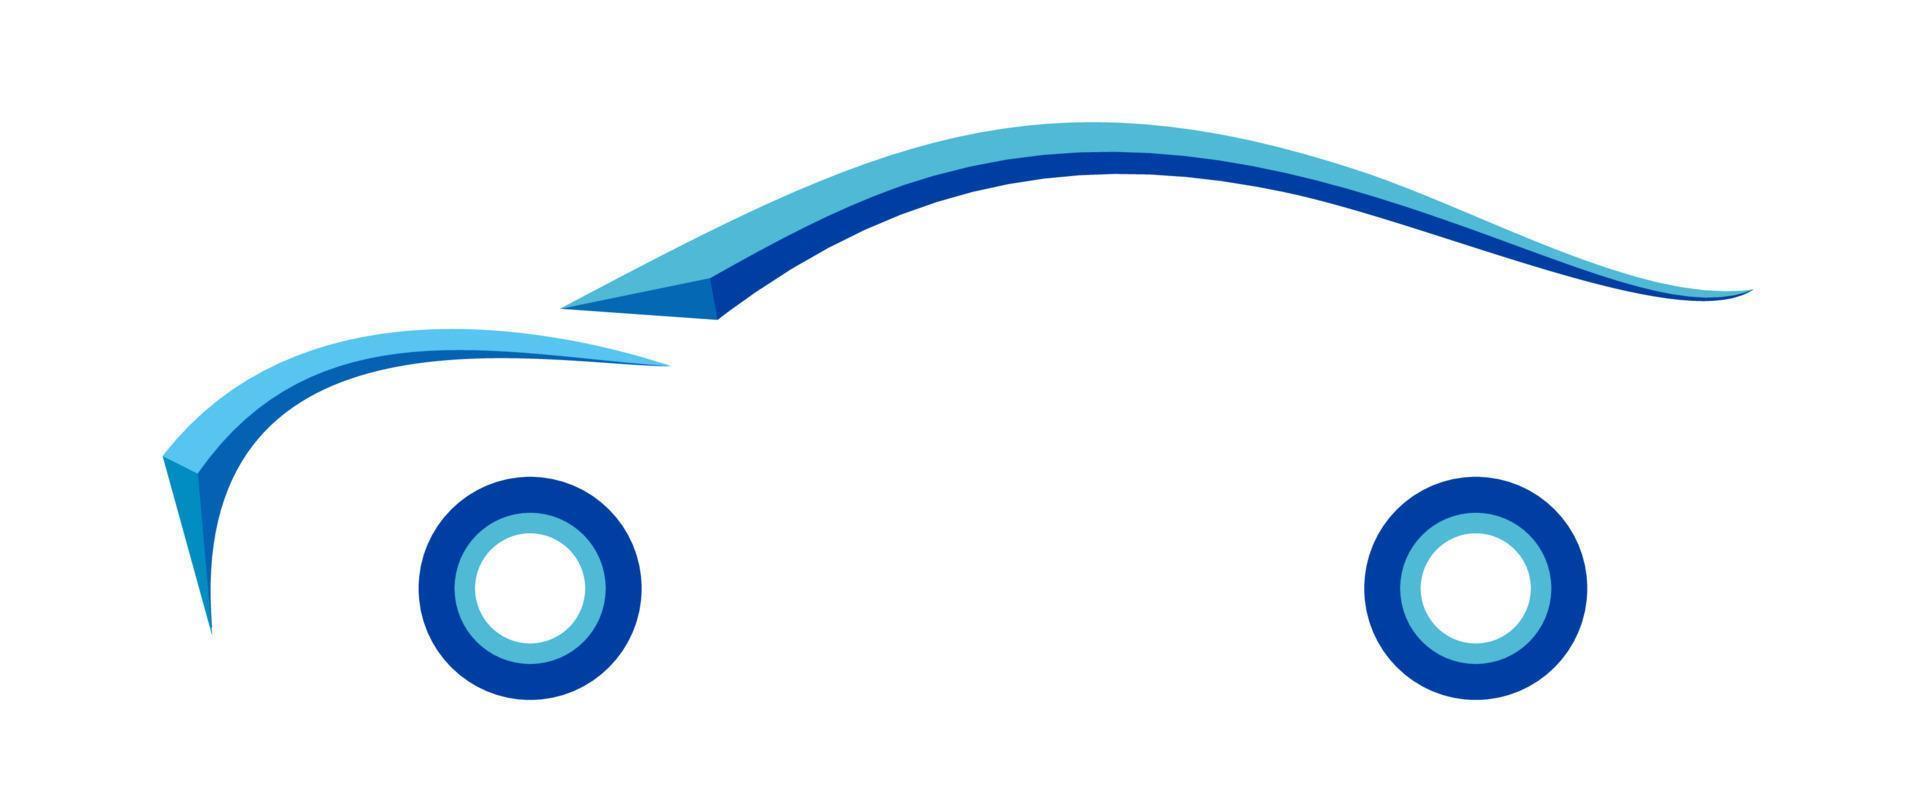 diseño del logotipo del coche azul. coche de vista lateral. vector